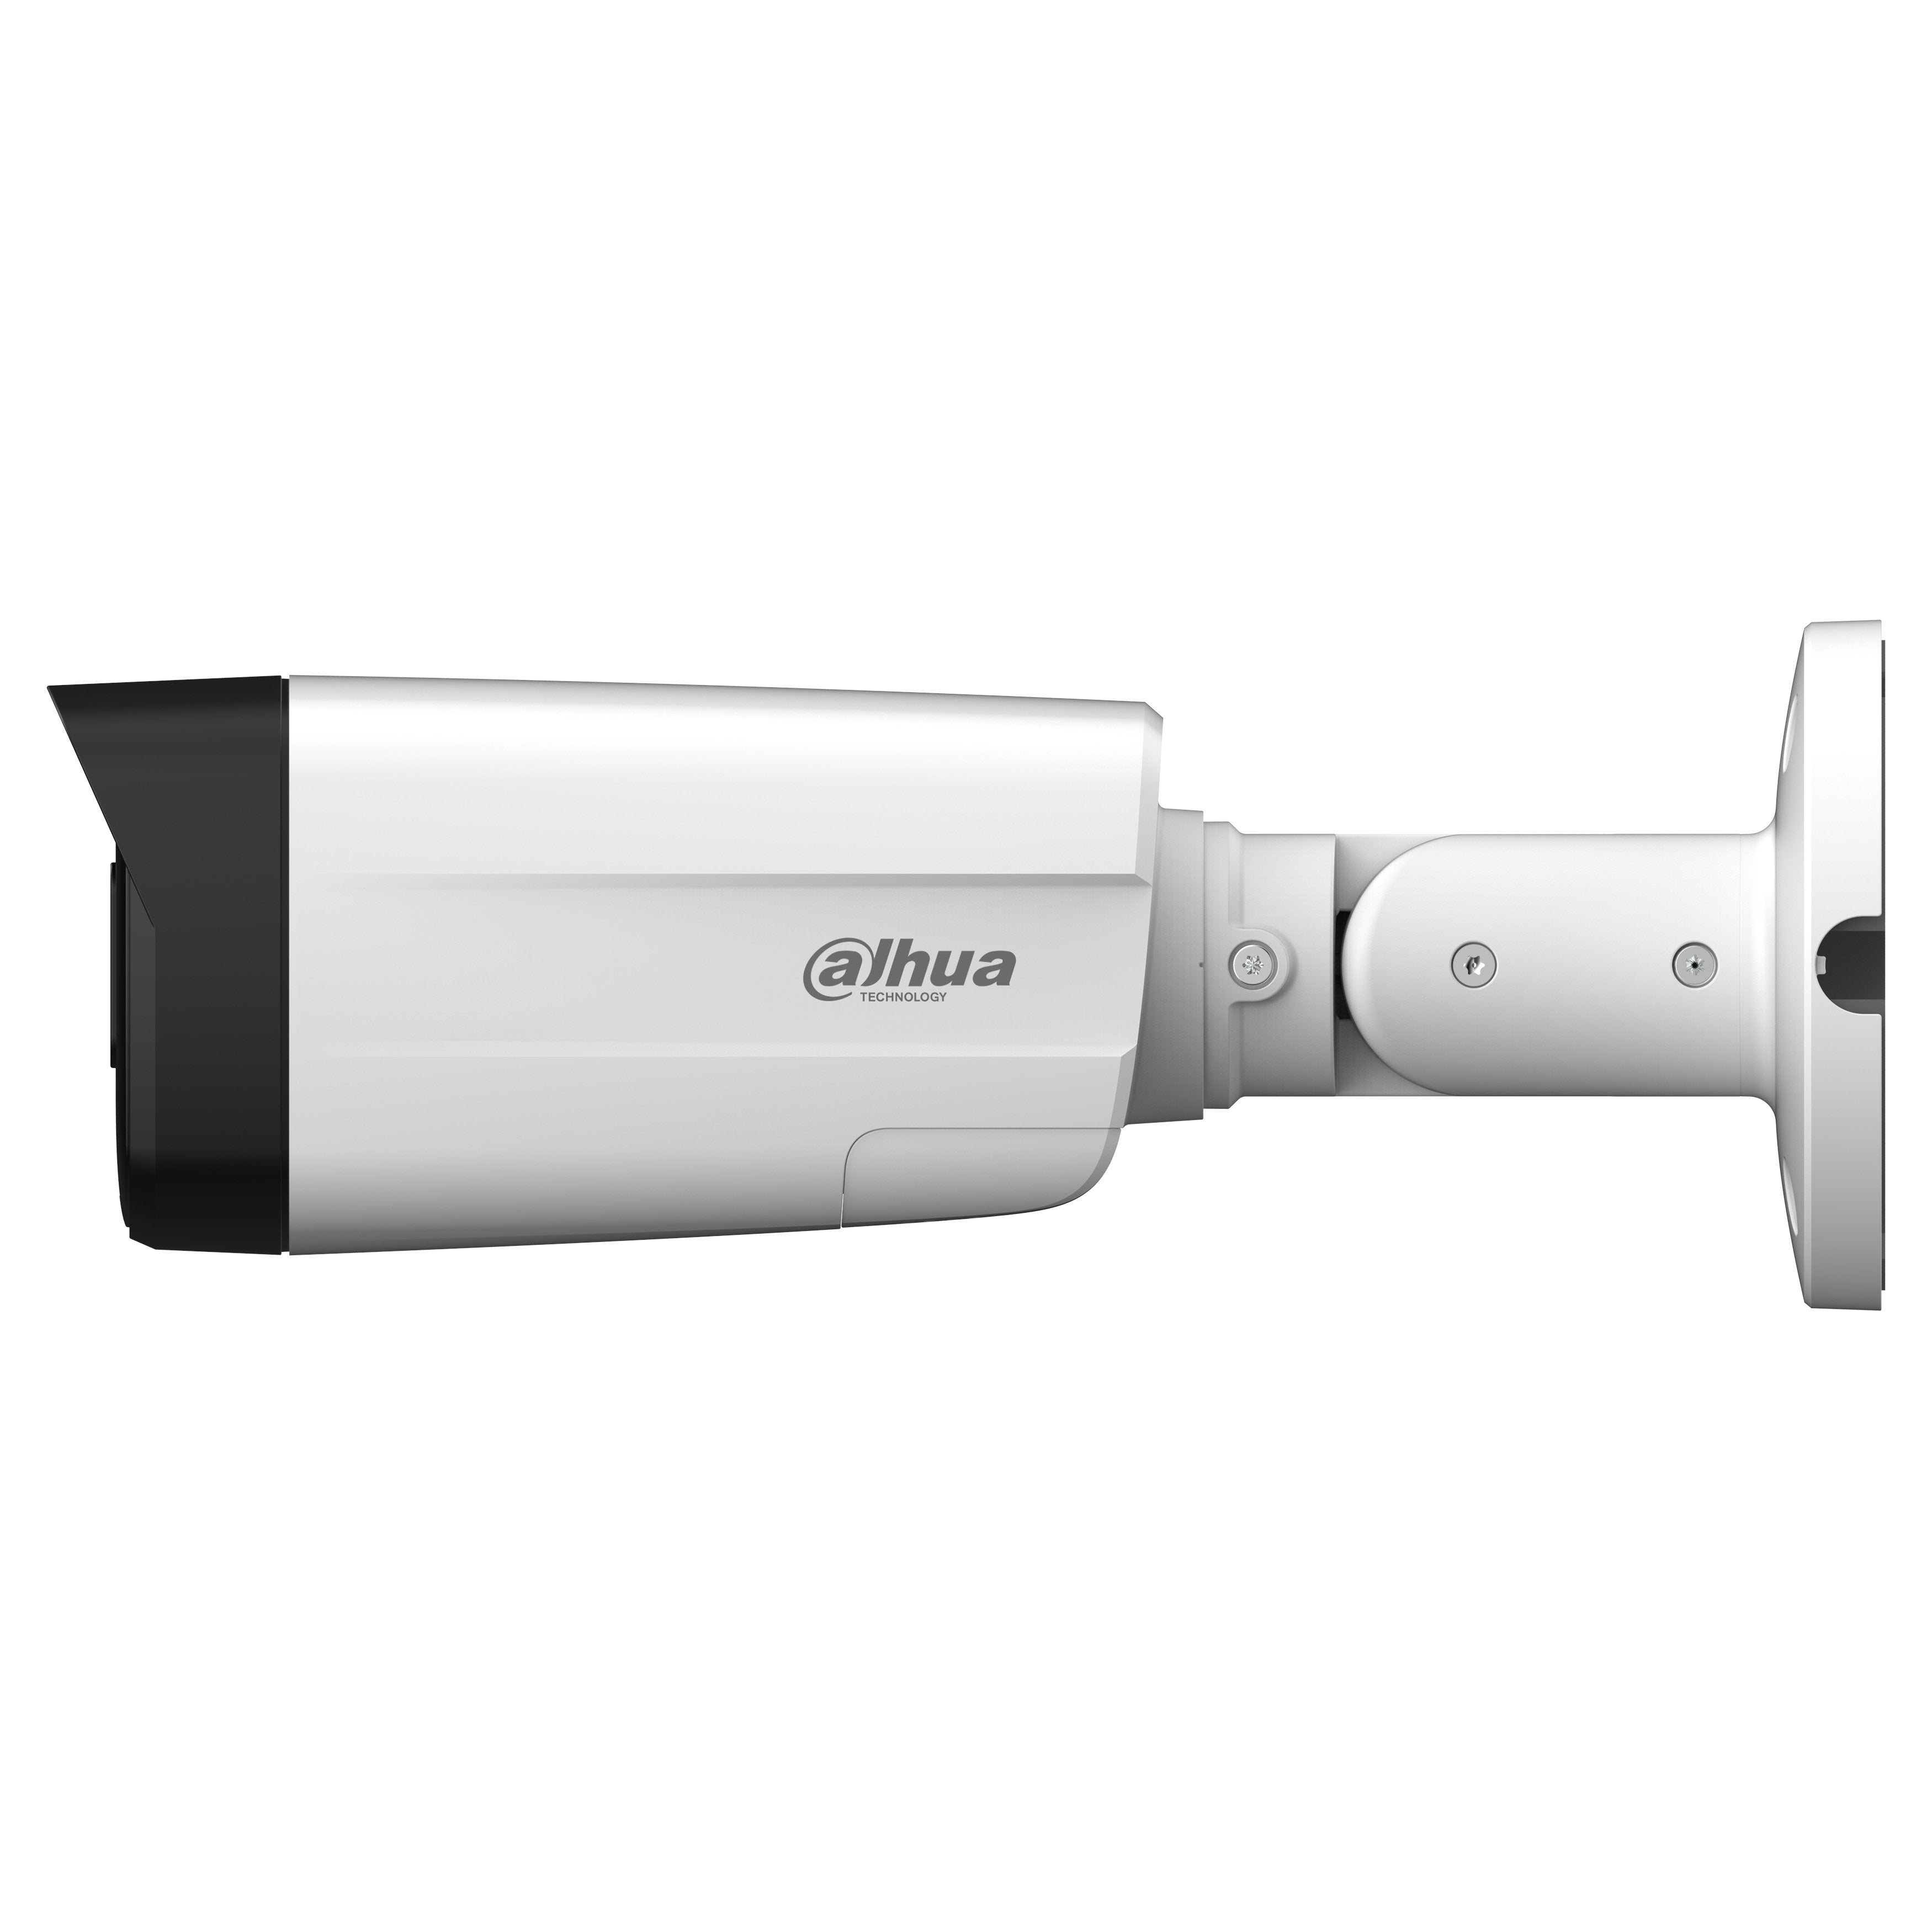 Dahua 5MP HDCVI Active Deterrence TiOC Bullet Camera, 2.8mm, 120dB WDR, 40m IR / White Light, 12VDC, IP67, Built-in Mic / Speaker, Red / Blue Lights (Junction Box: PFA130-E)